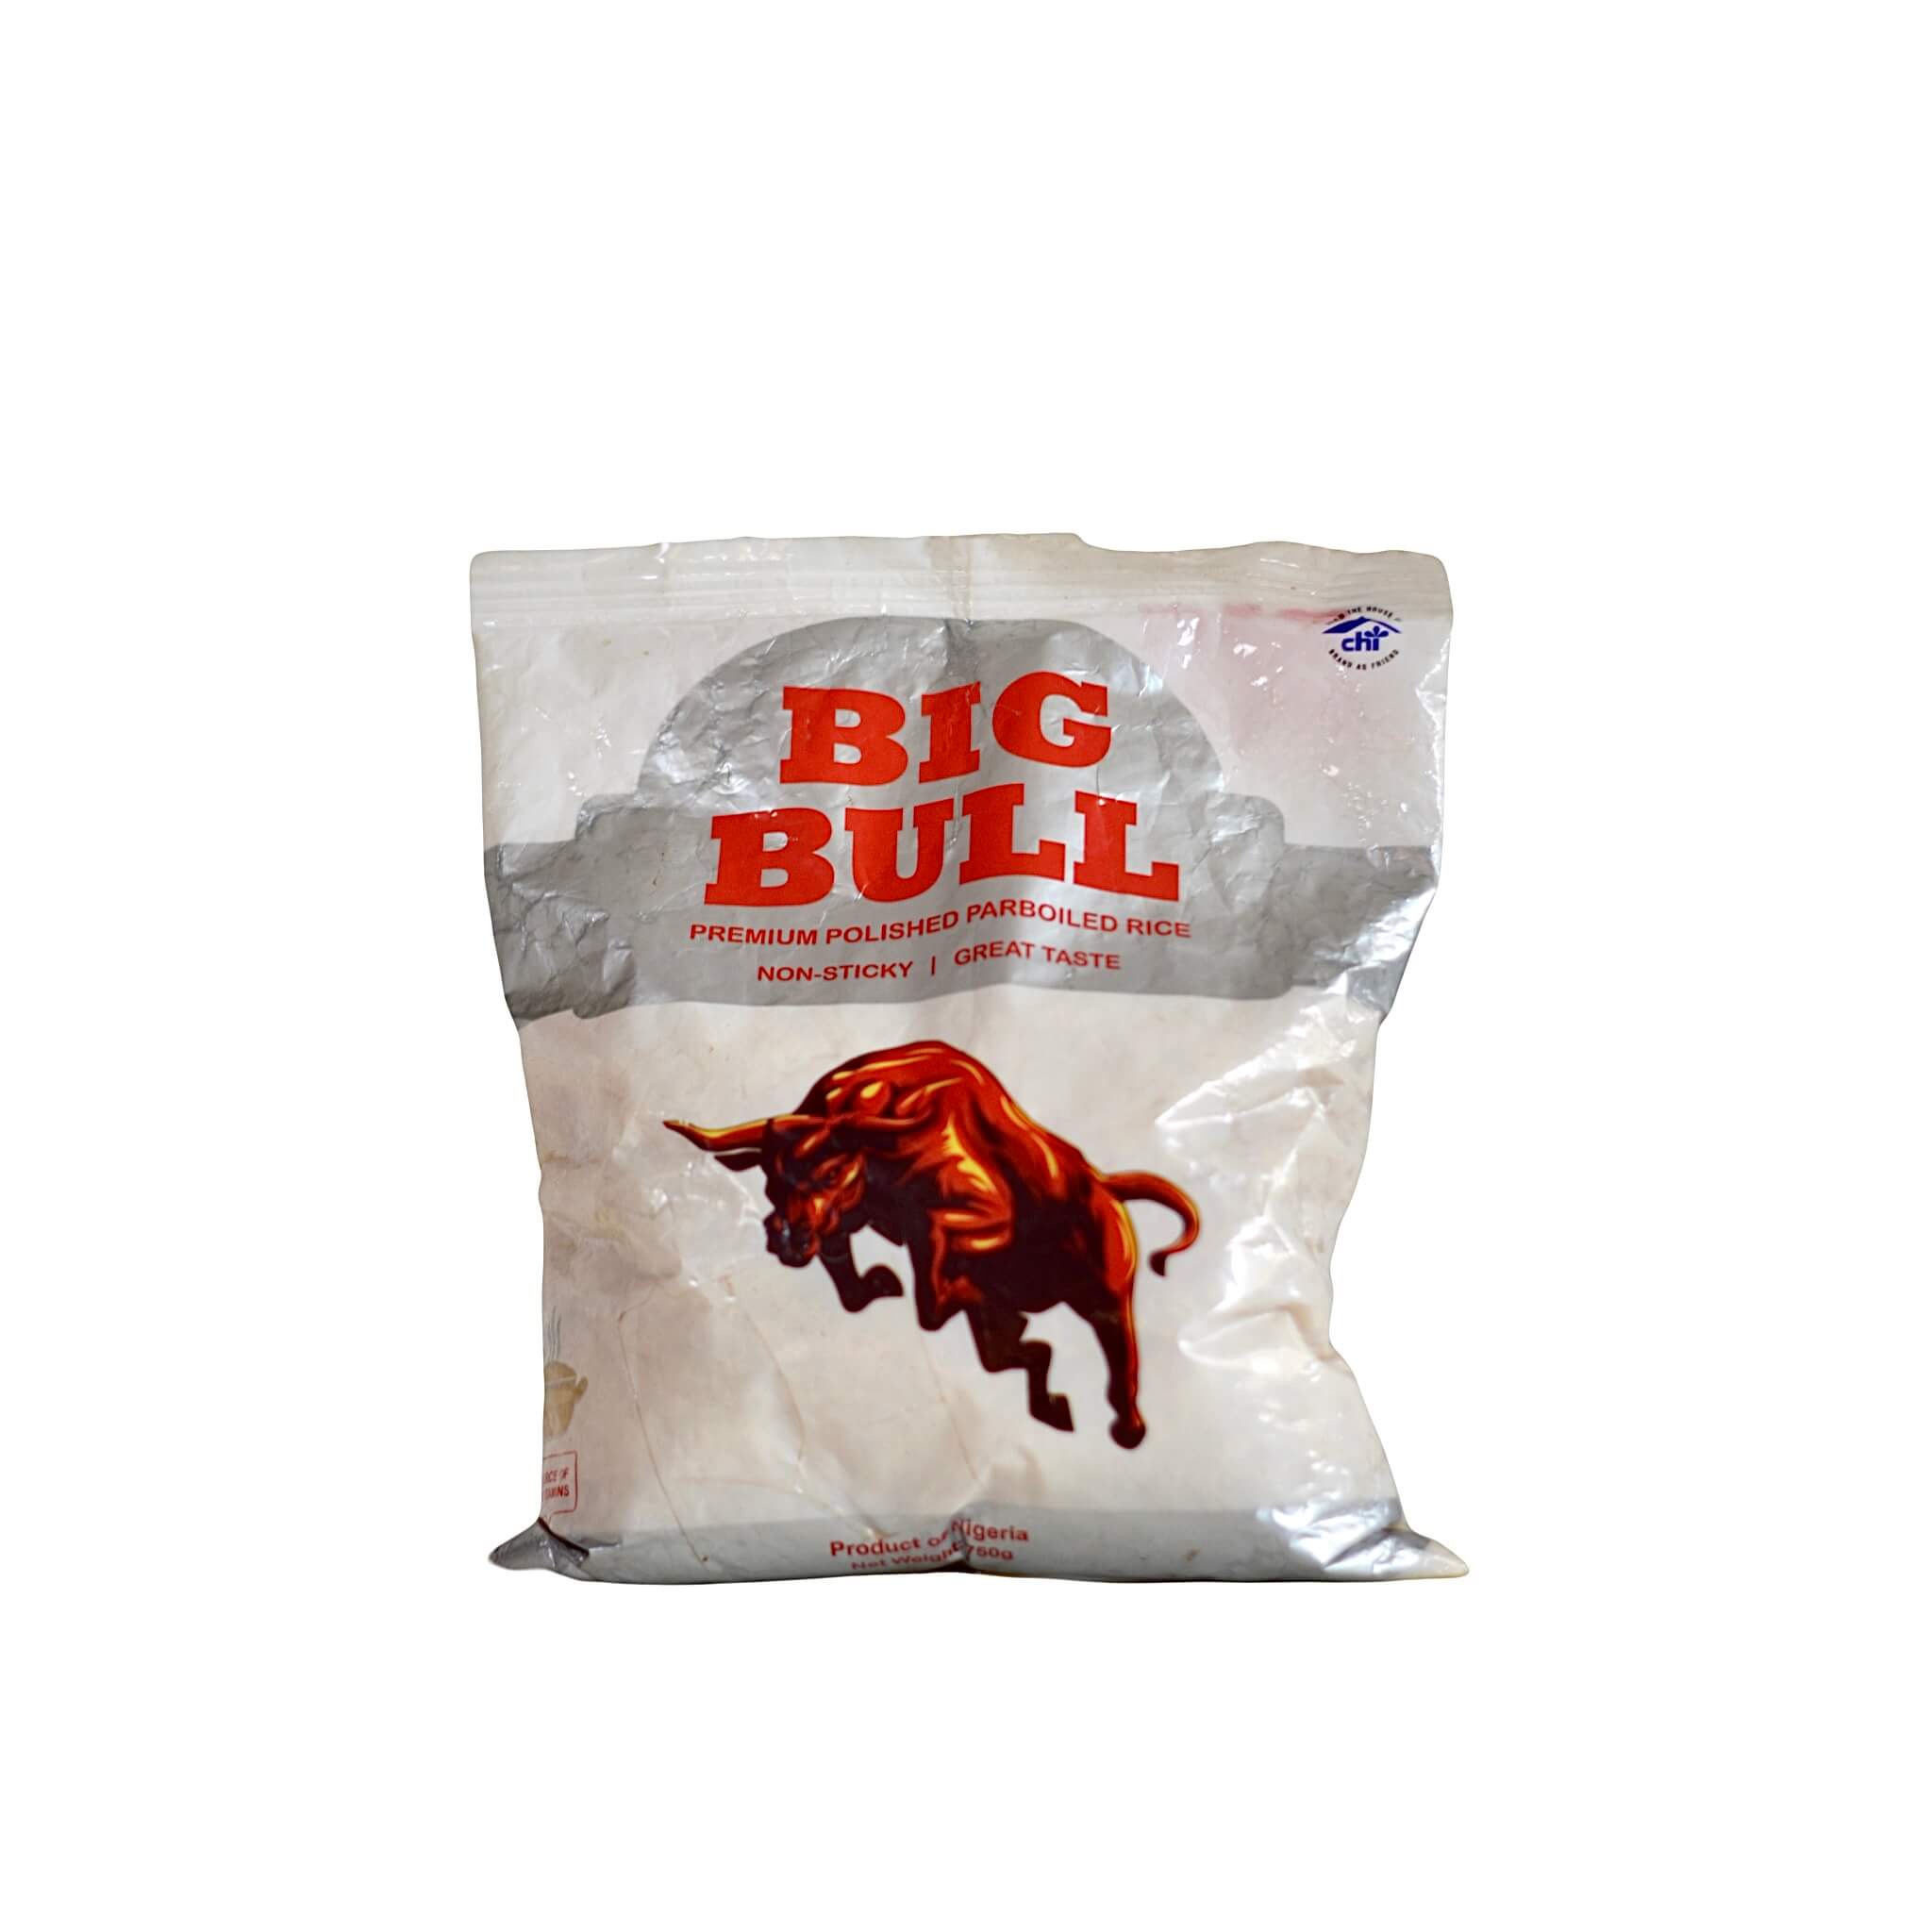 a sachet of Big Bull Rice